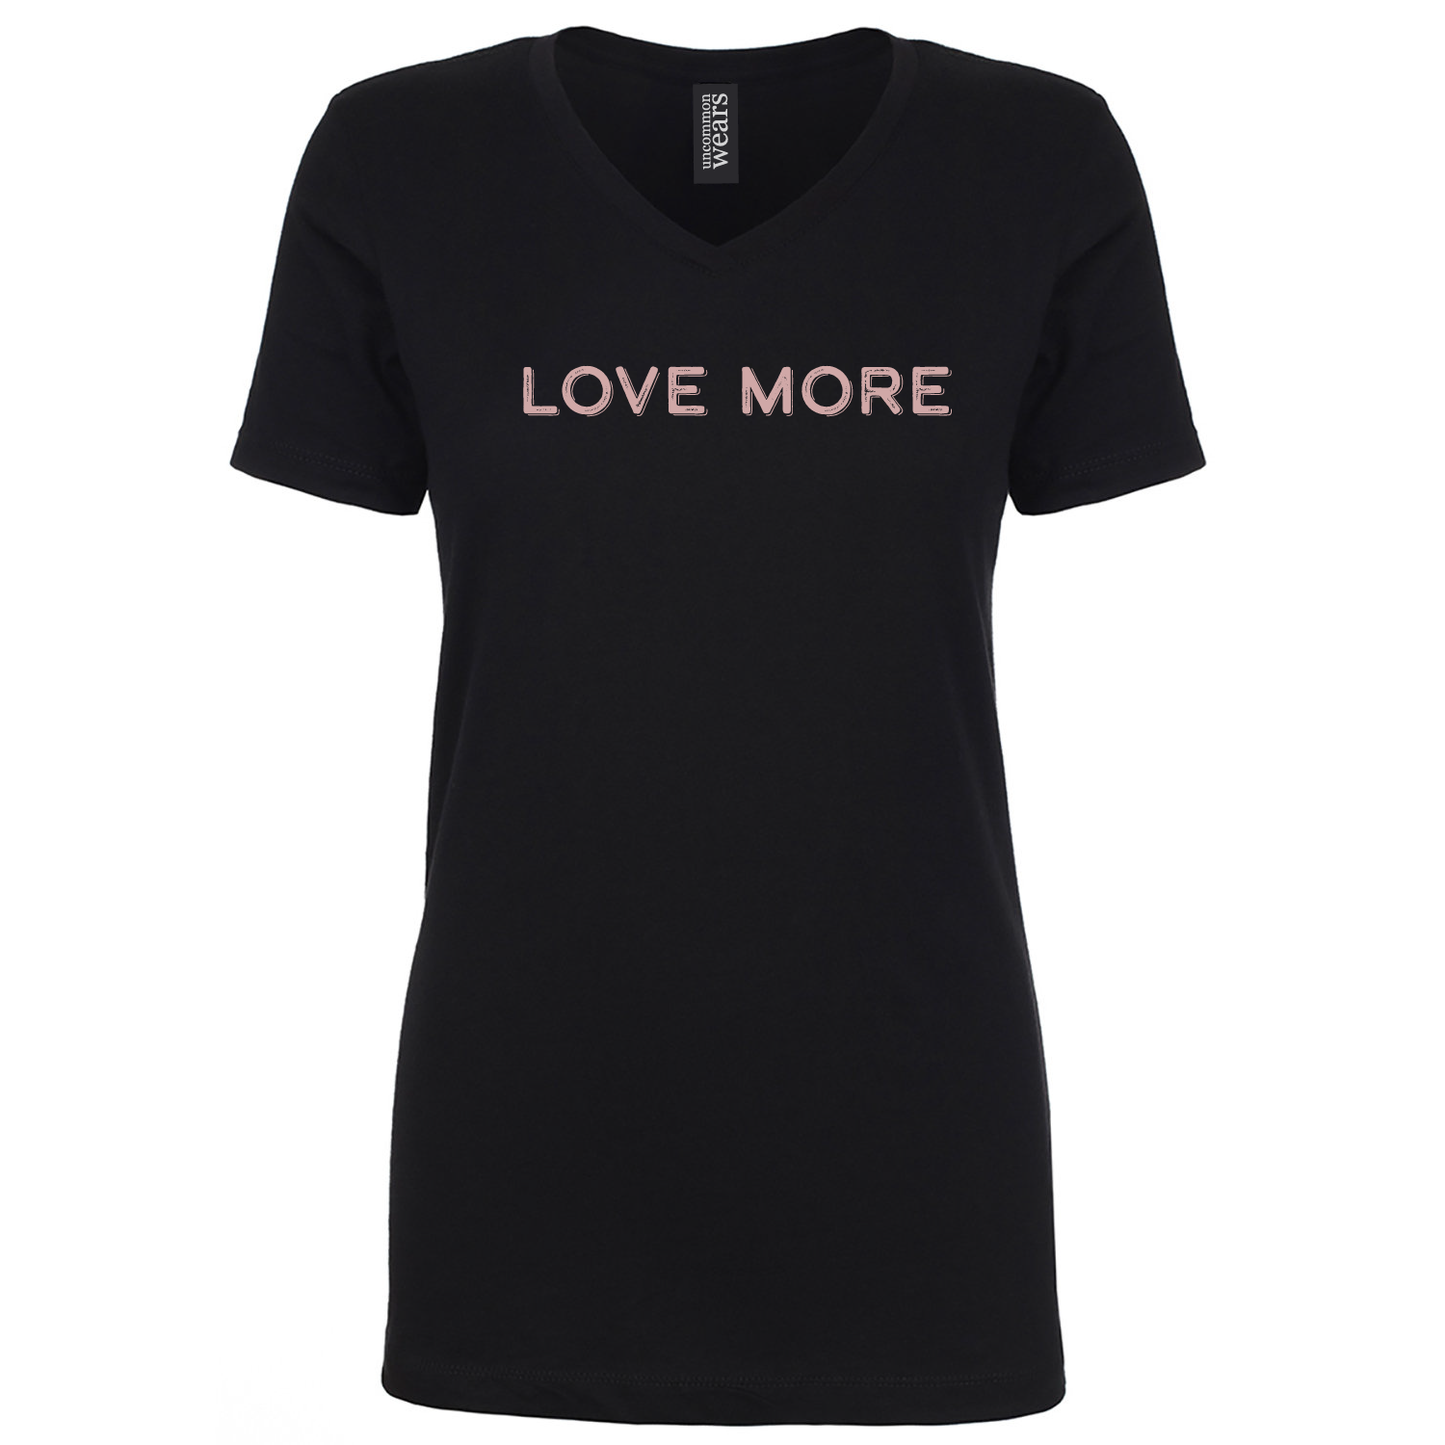 Love More Black T-Shirt - 071